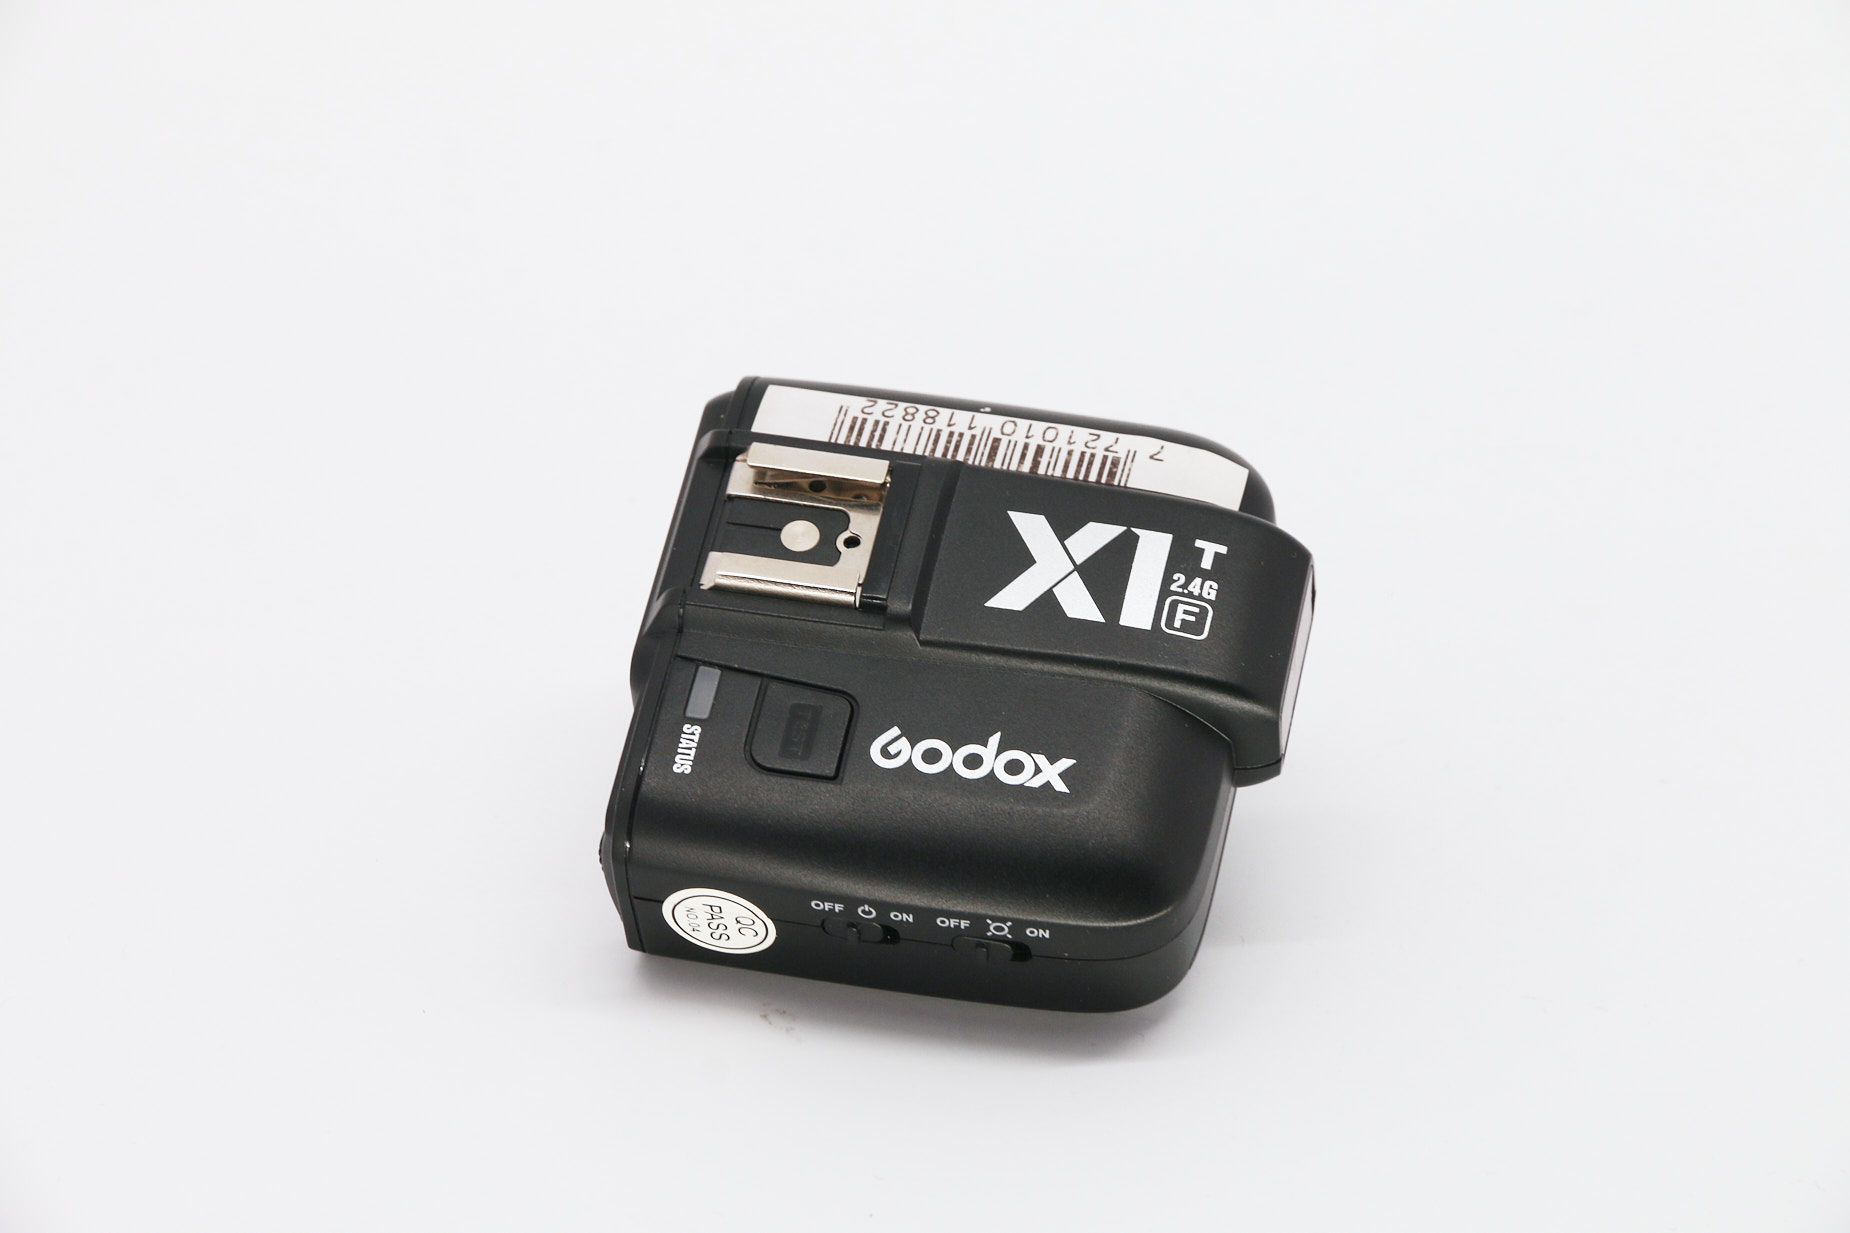 Godox X1 T funkauslöser für Fuji gebraucht Bild 01